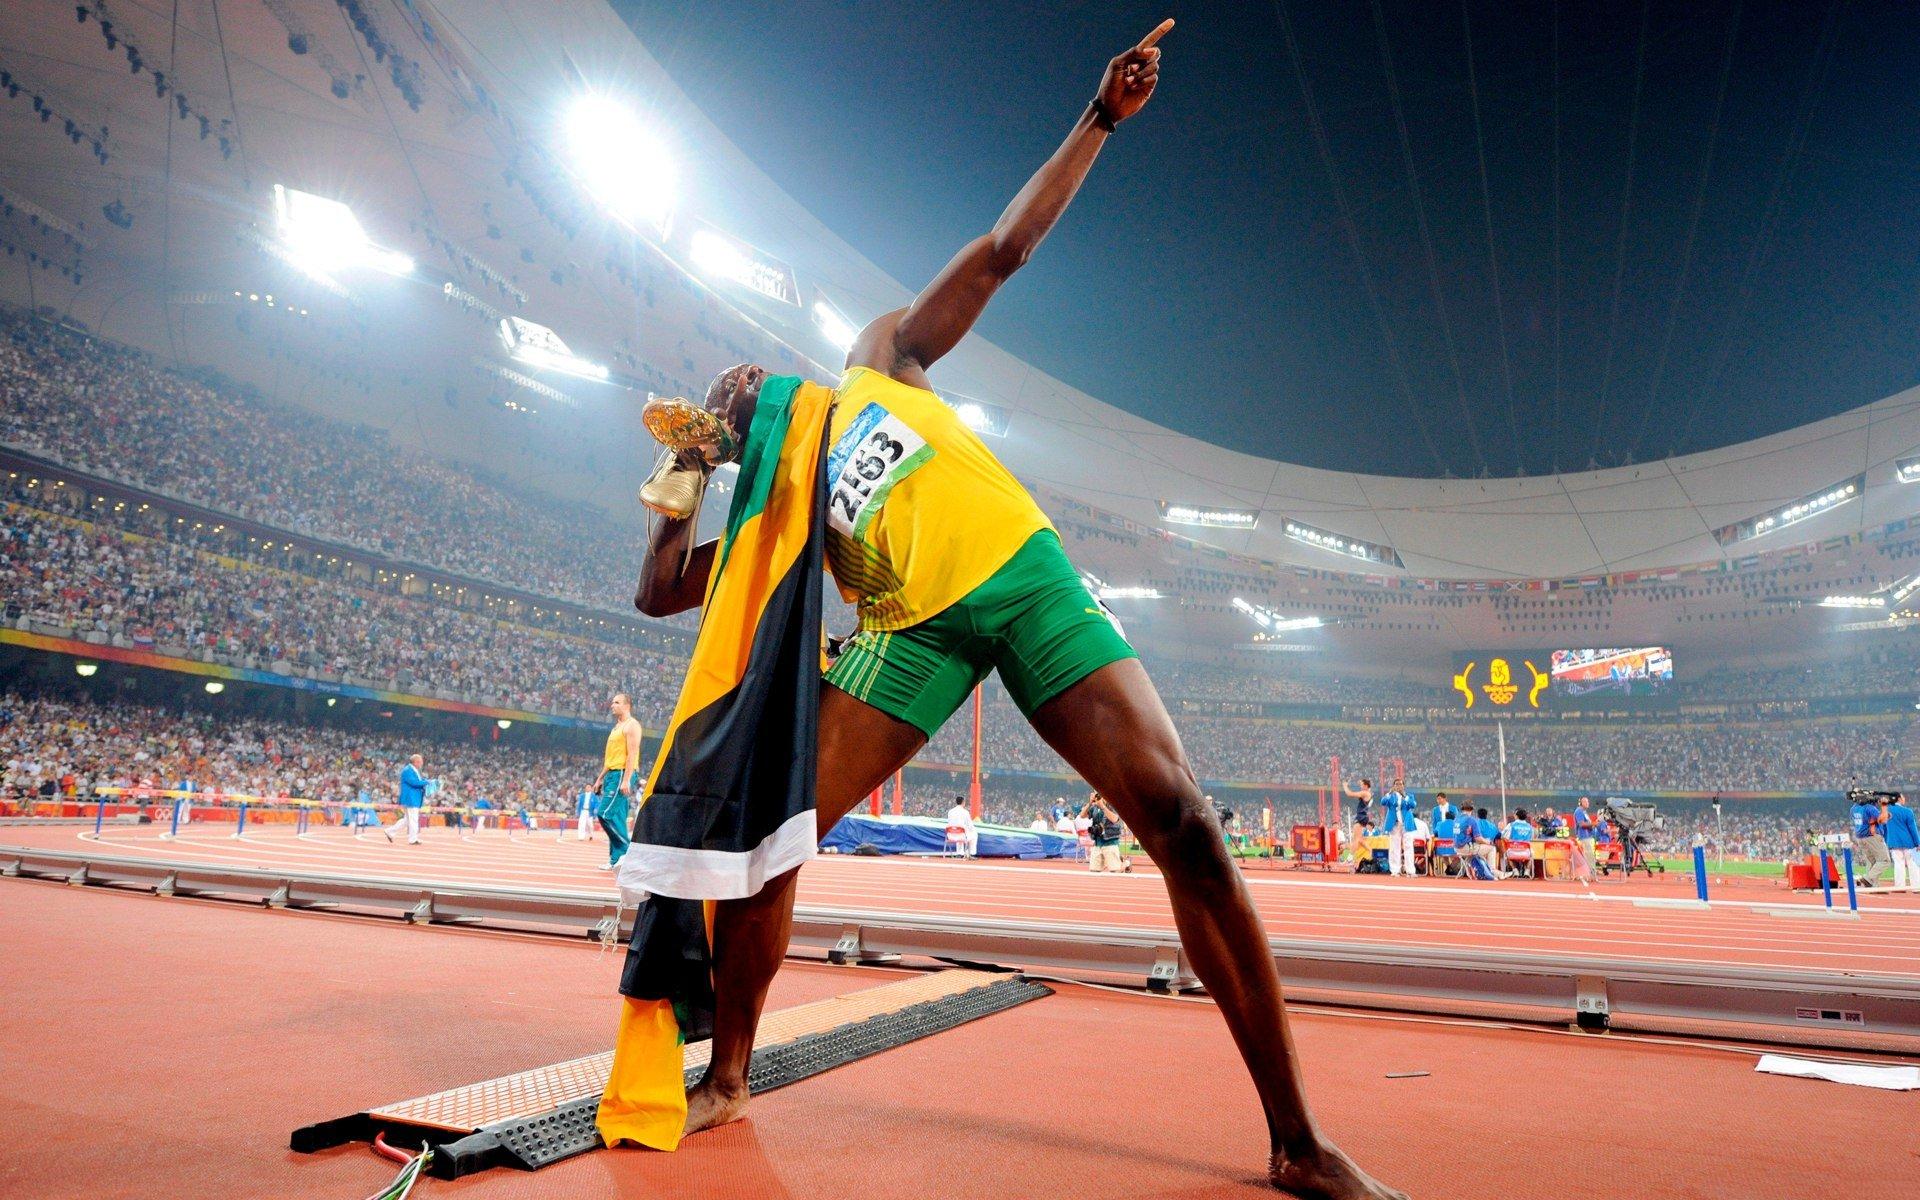 http://tfs.ucoz.com/2011-Images/Athletes-pix/Articles/Usain_Bolt_Wallpaper.jpg